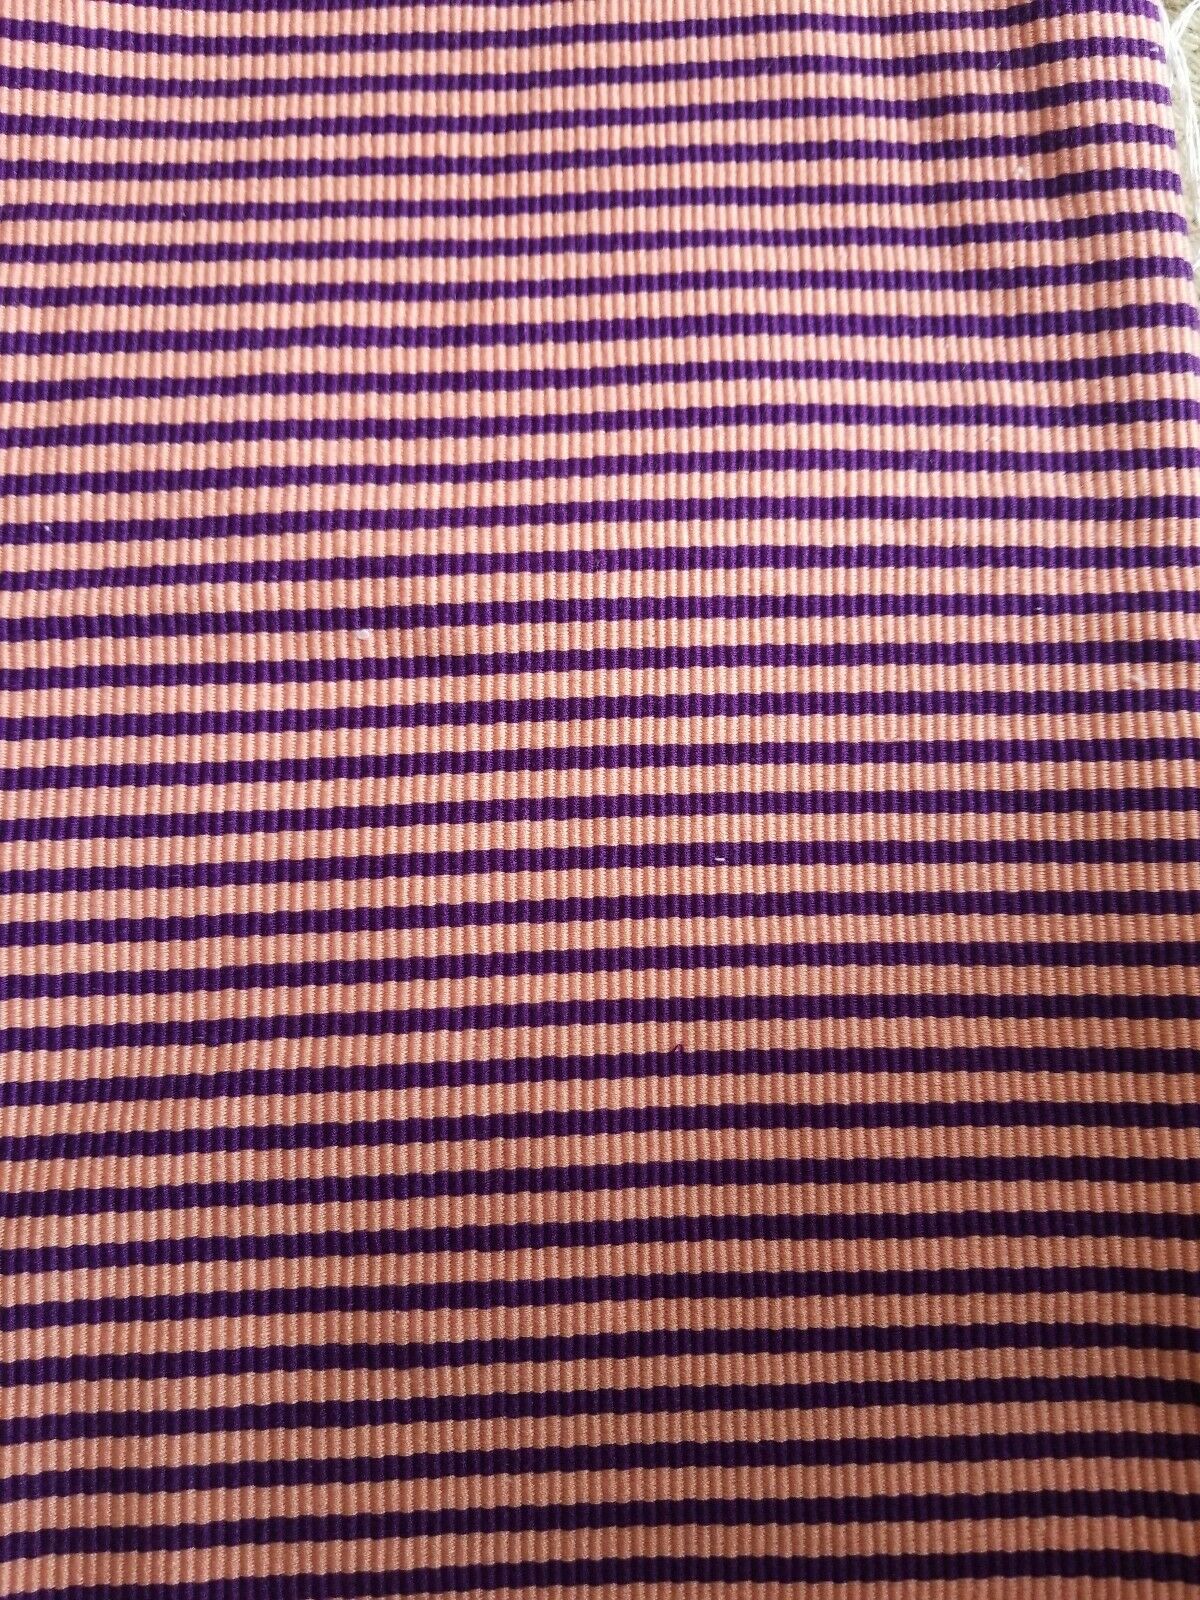 Faso Da Fani Fabric From Boukina Faso~peach with purple stripes 79"(2yds&7")×15"